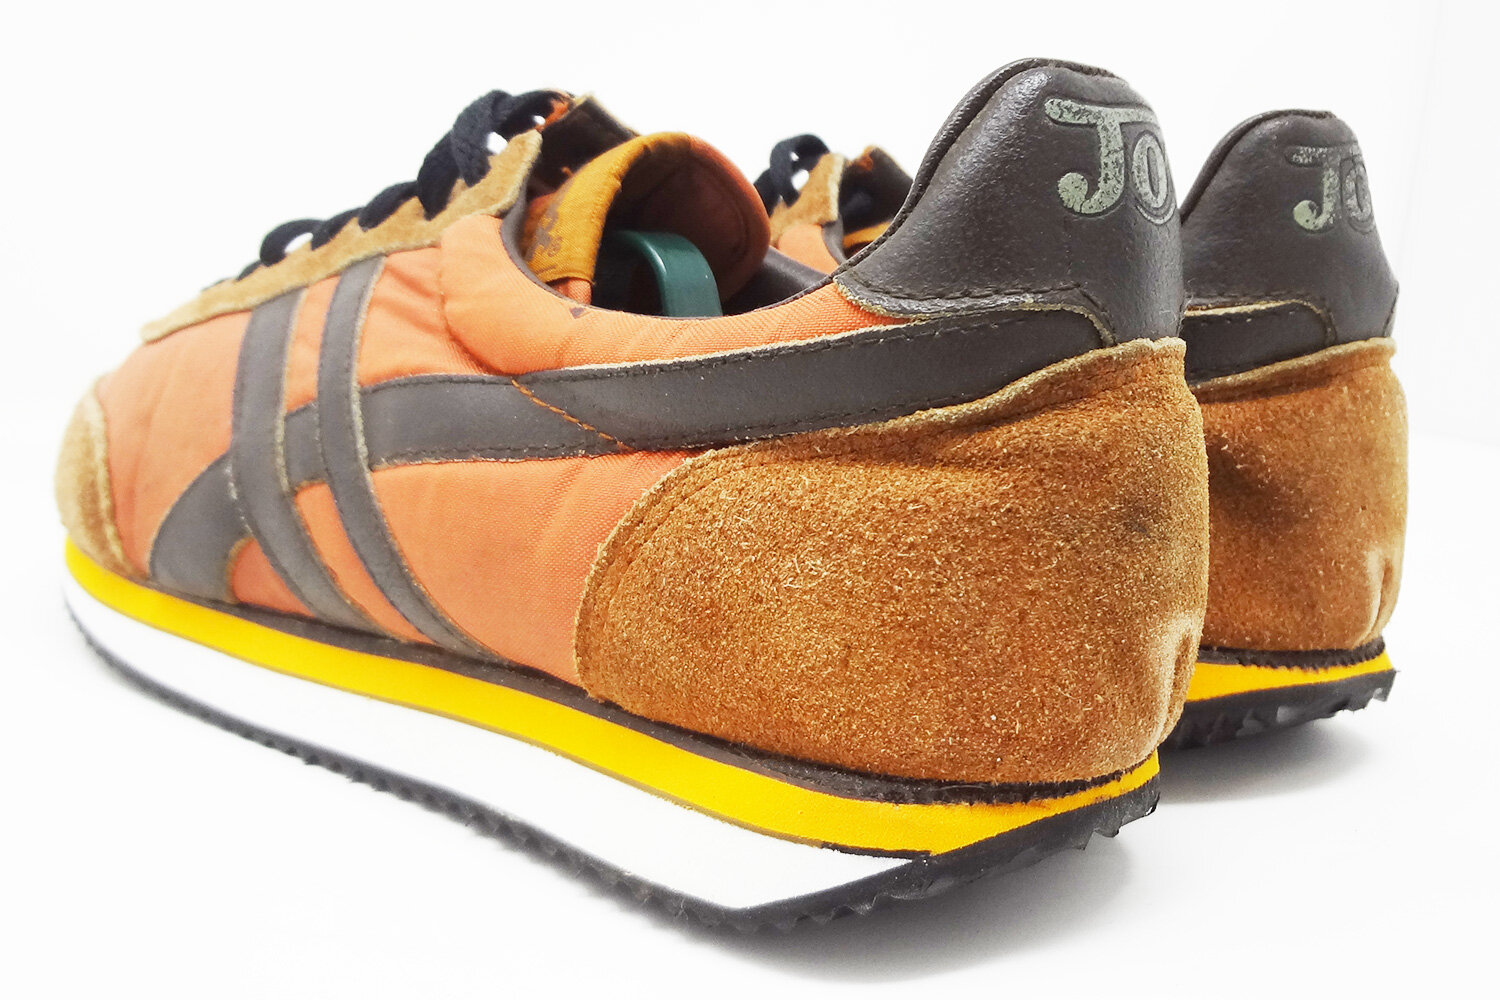 Jox vintage running shoes restoration @ The Deffest